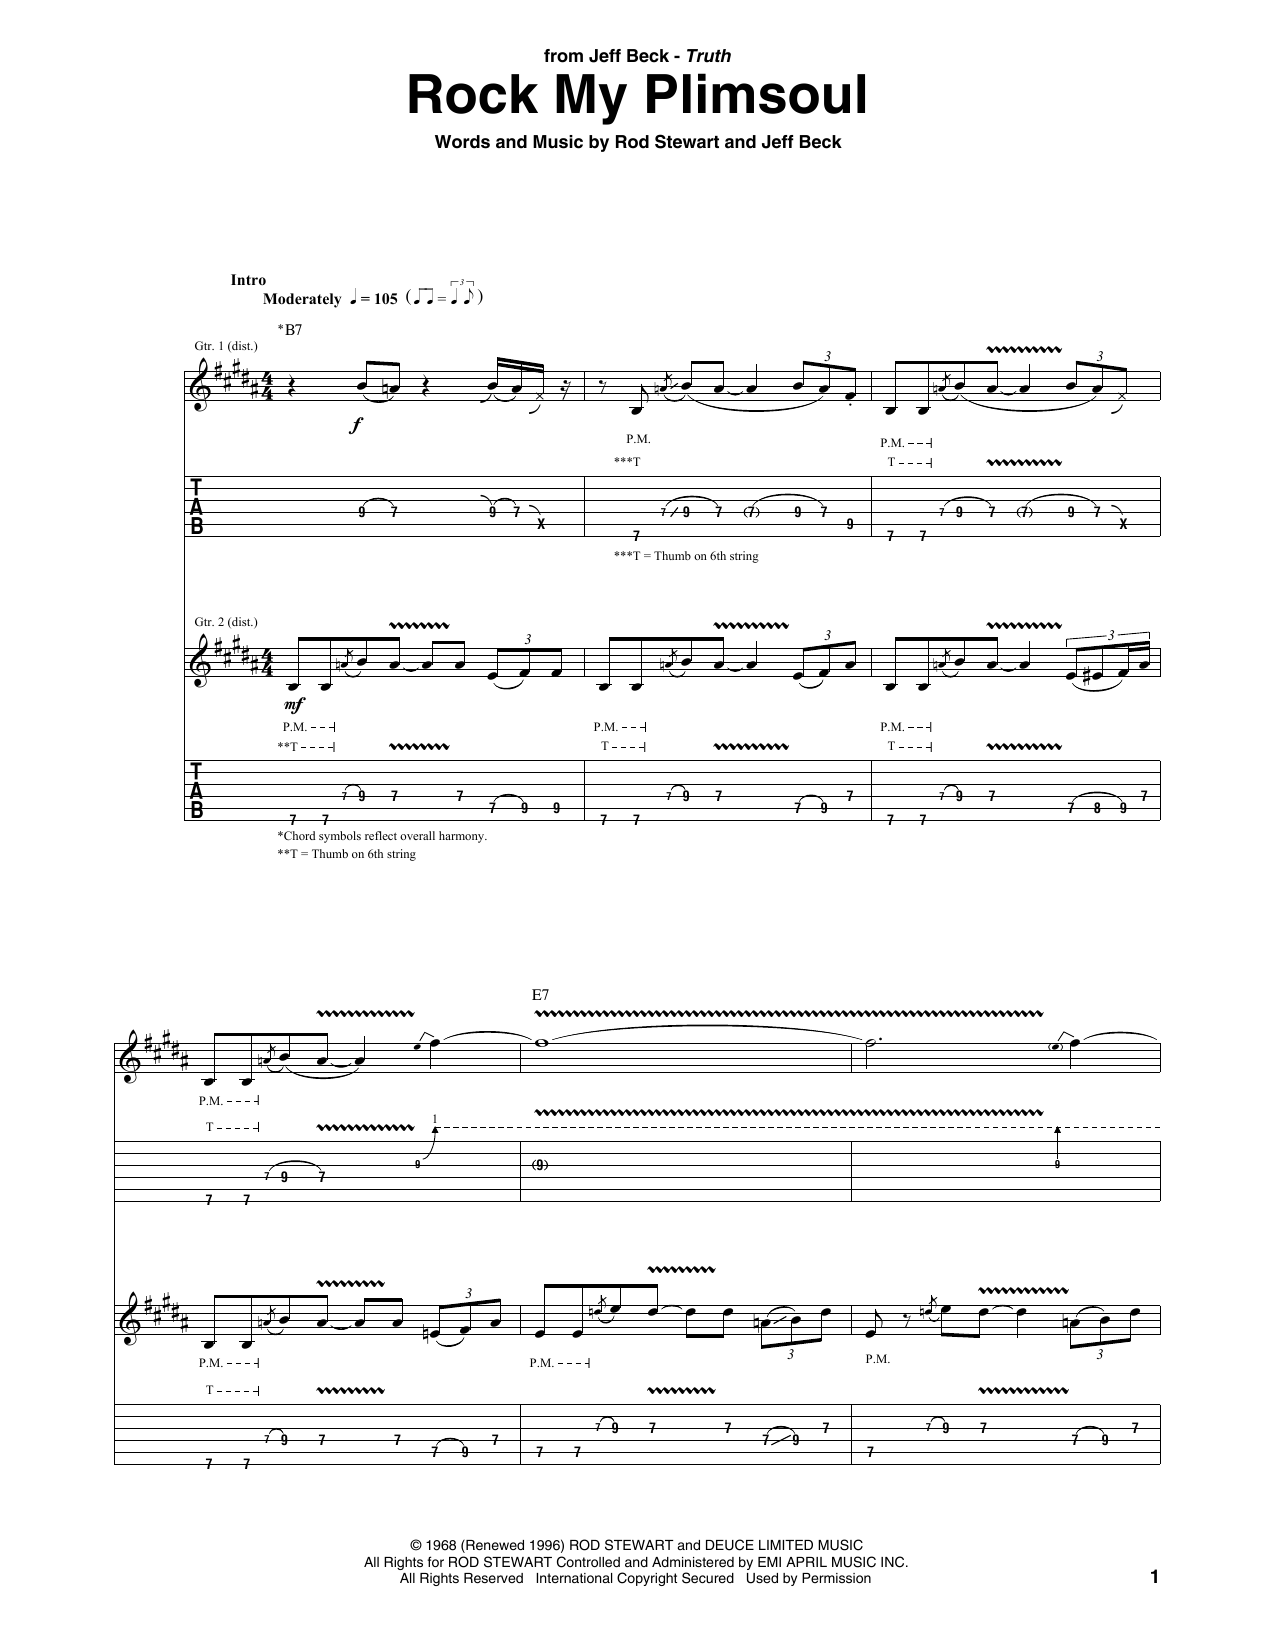 Jeff Beck Rock My Plimsoul Sheet Music Notes & Chords for Guitar Tab - Download or Print PDF